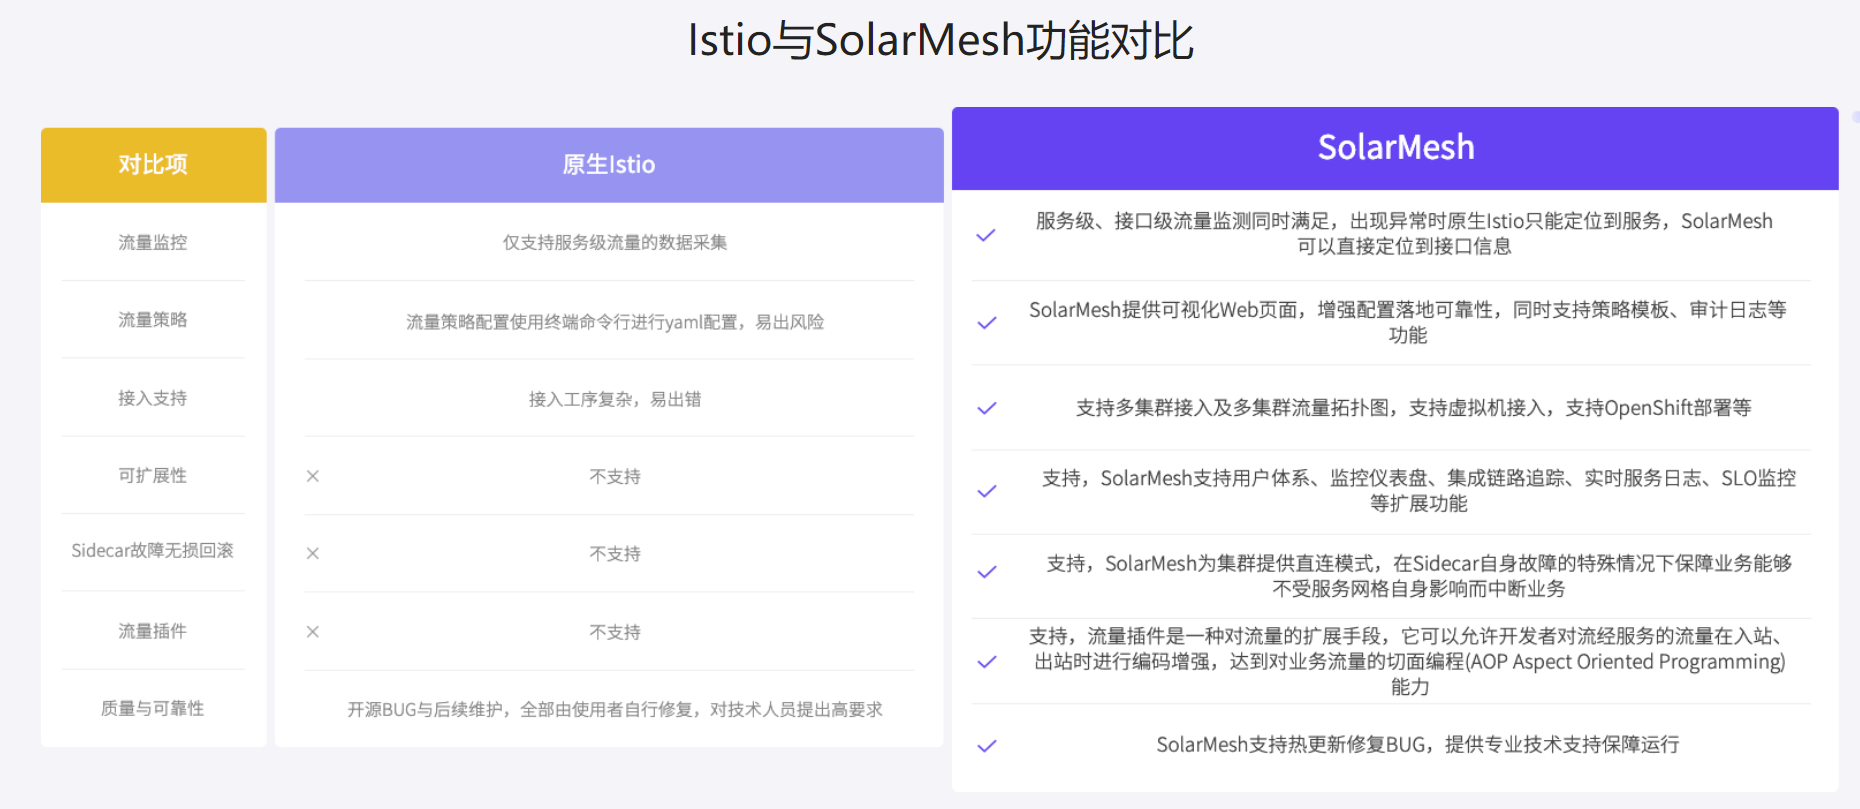 Istio与SolarMesh对比